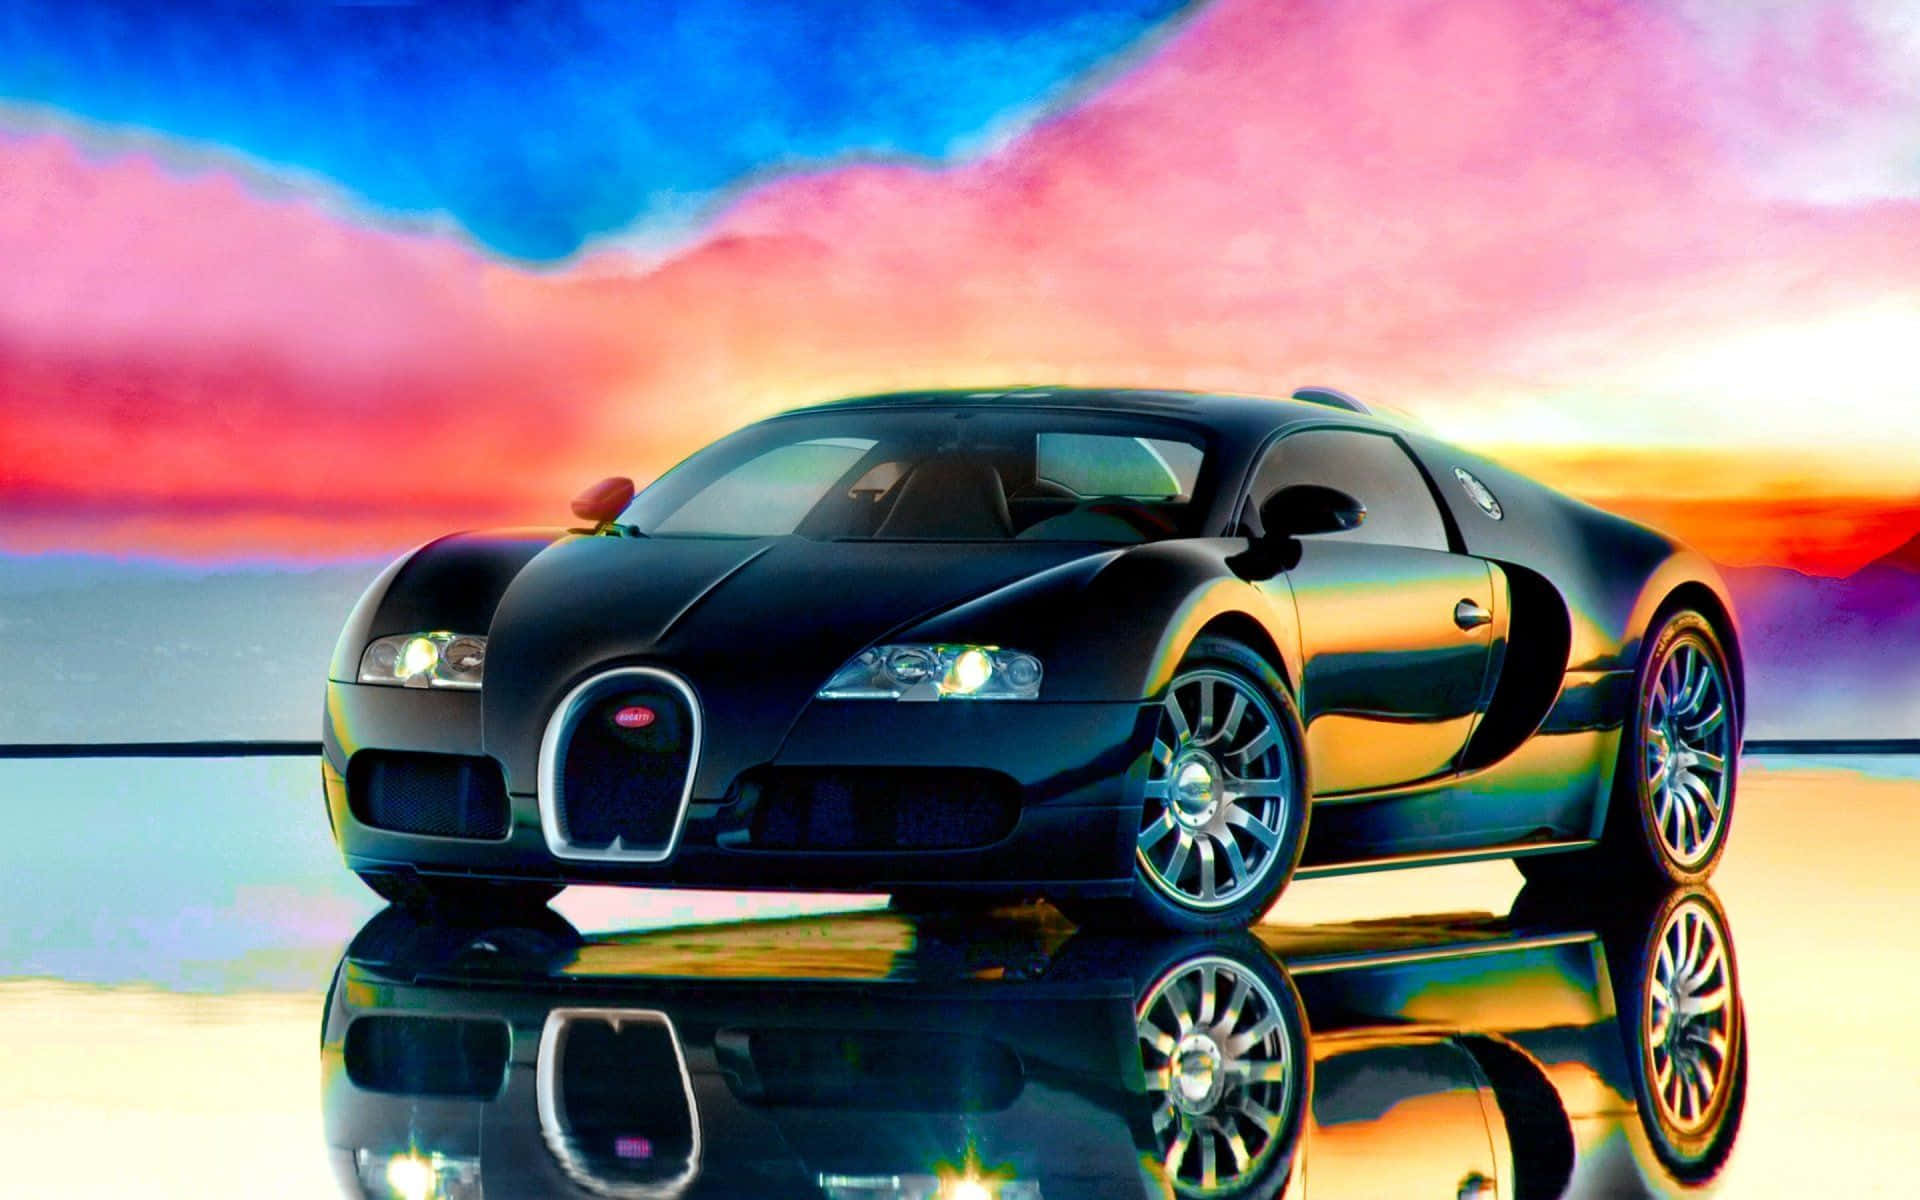 Brighten up the night with this Neon Bugatti Wallpaper